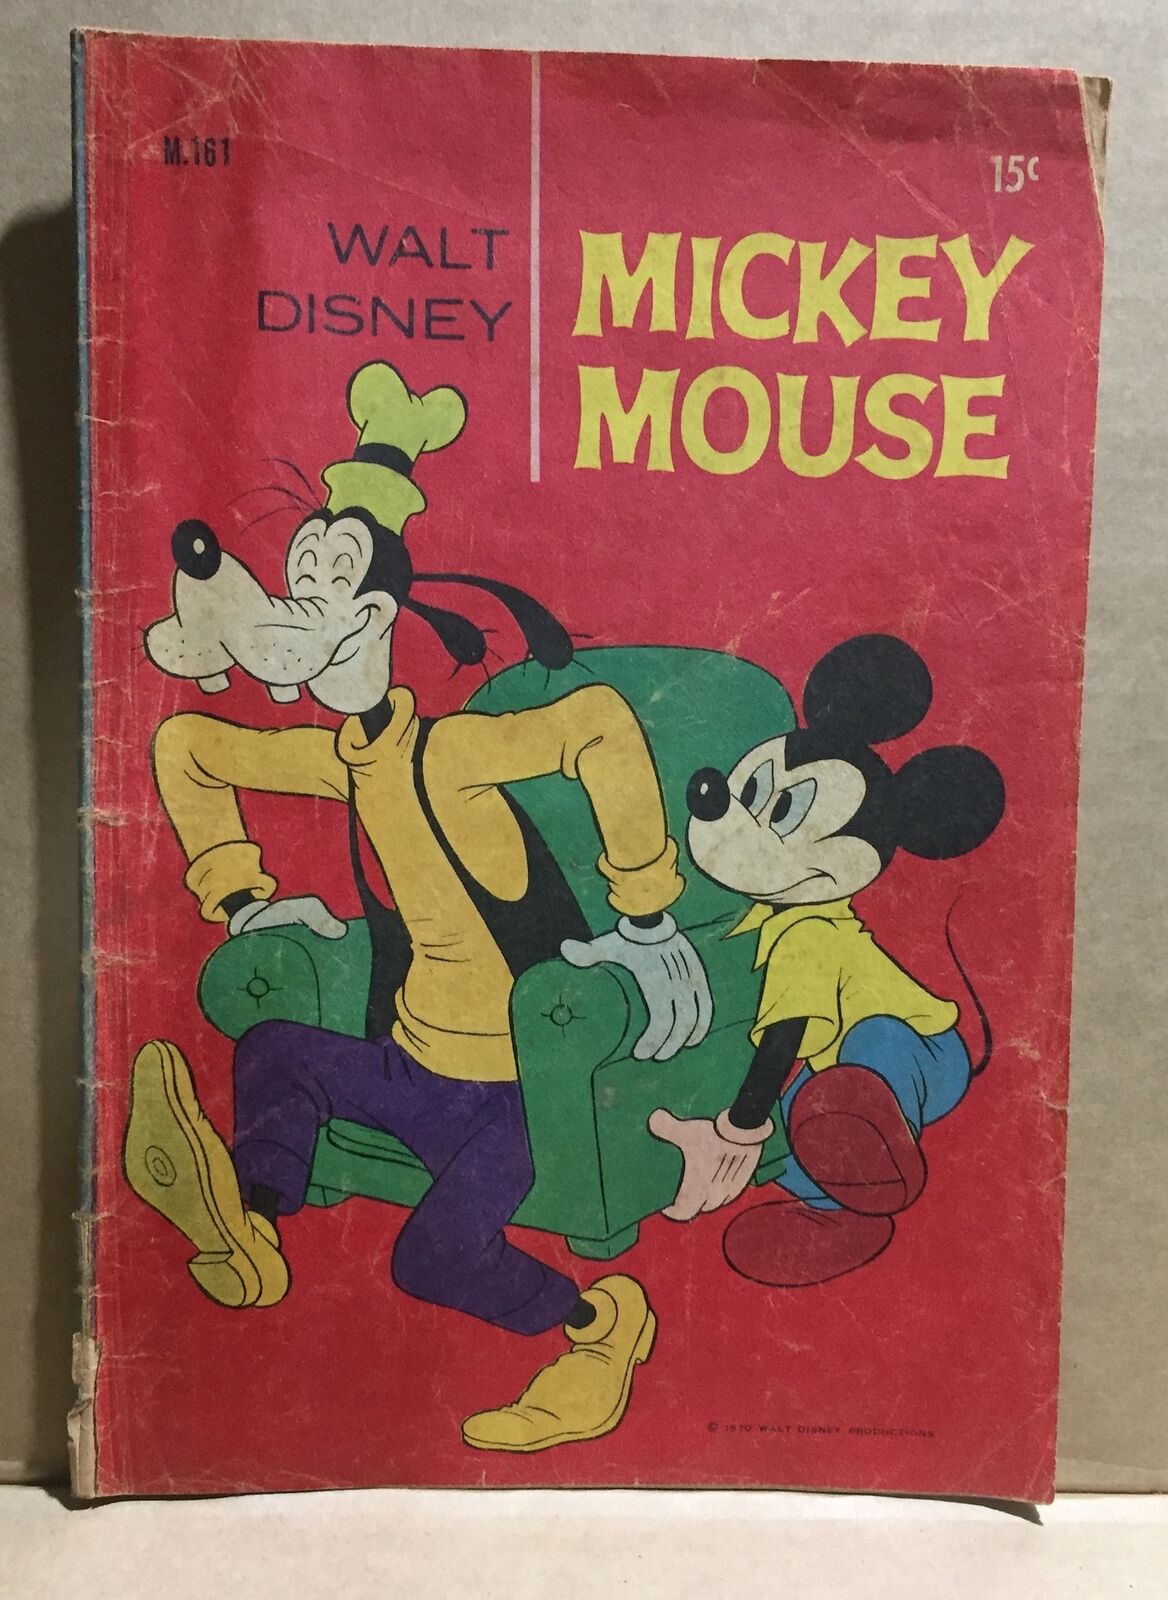 WALT DISNEY COMIC BOOK - MICKEY MOUSE M.161  australian